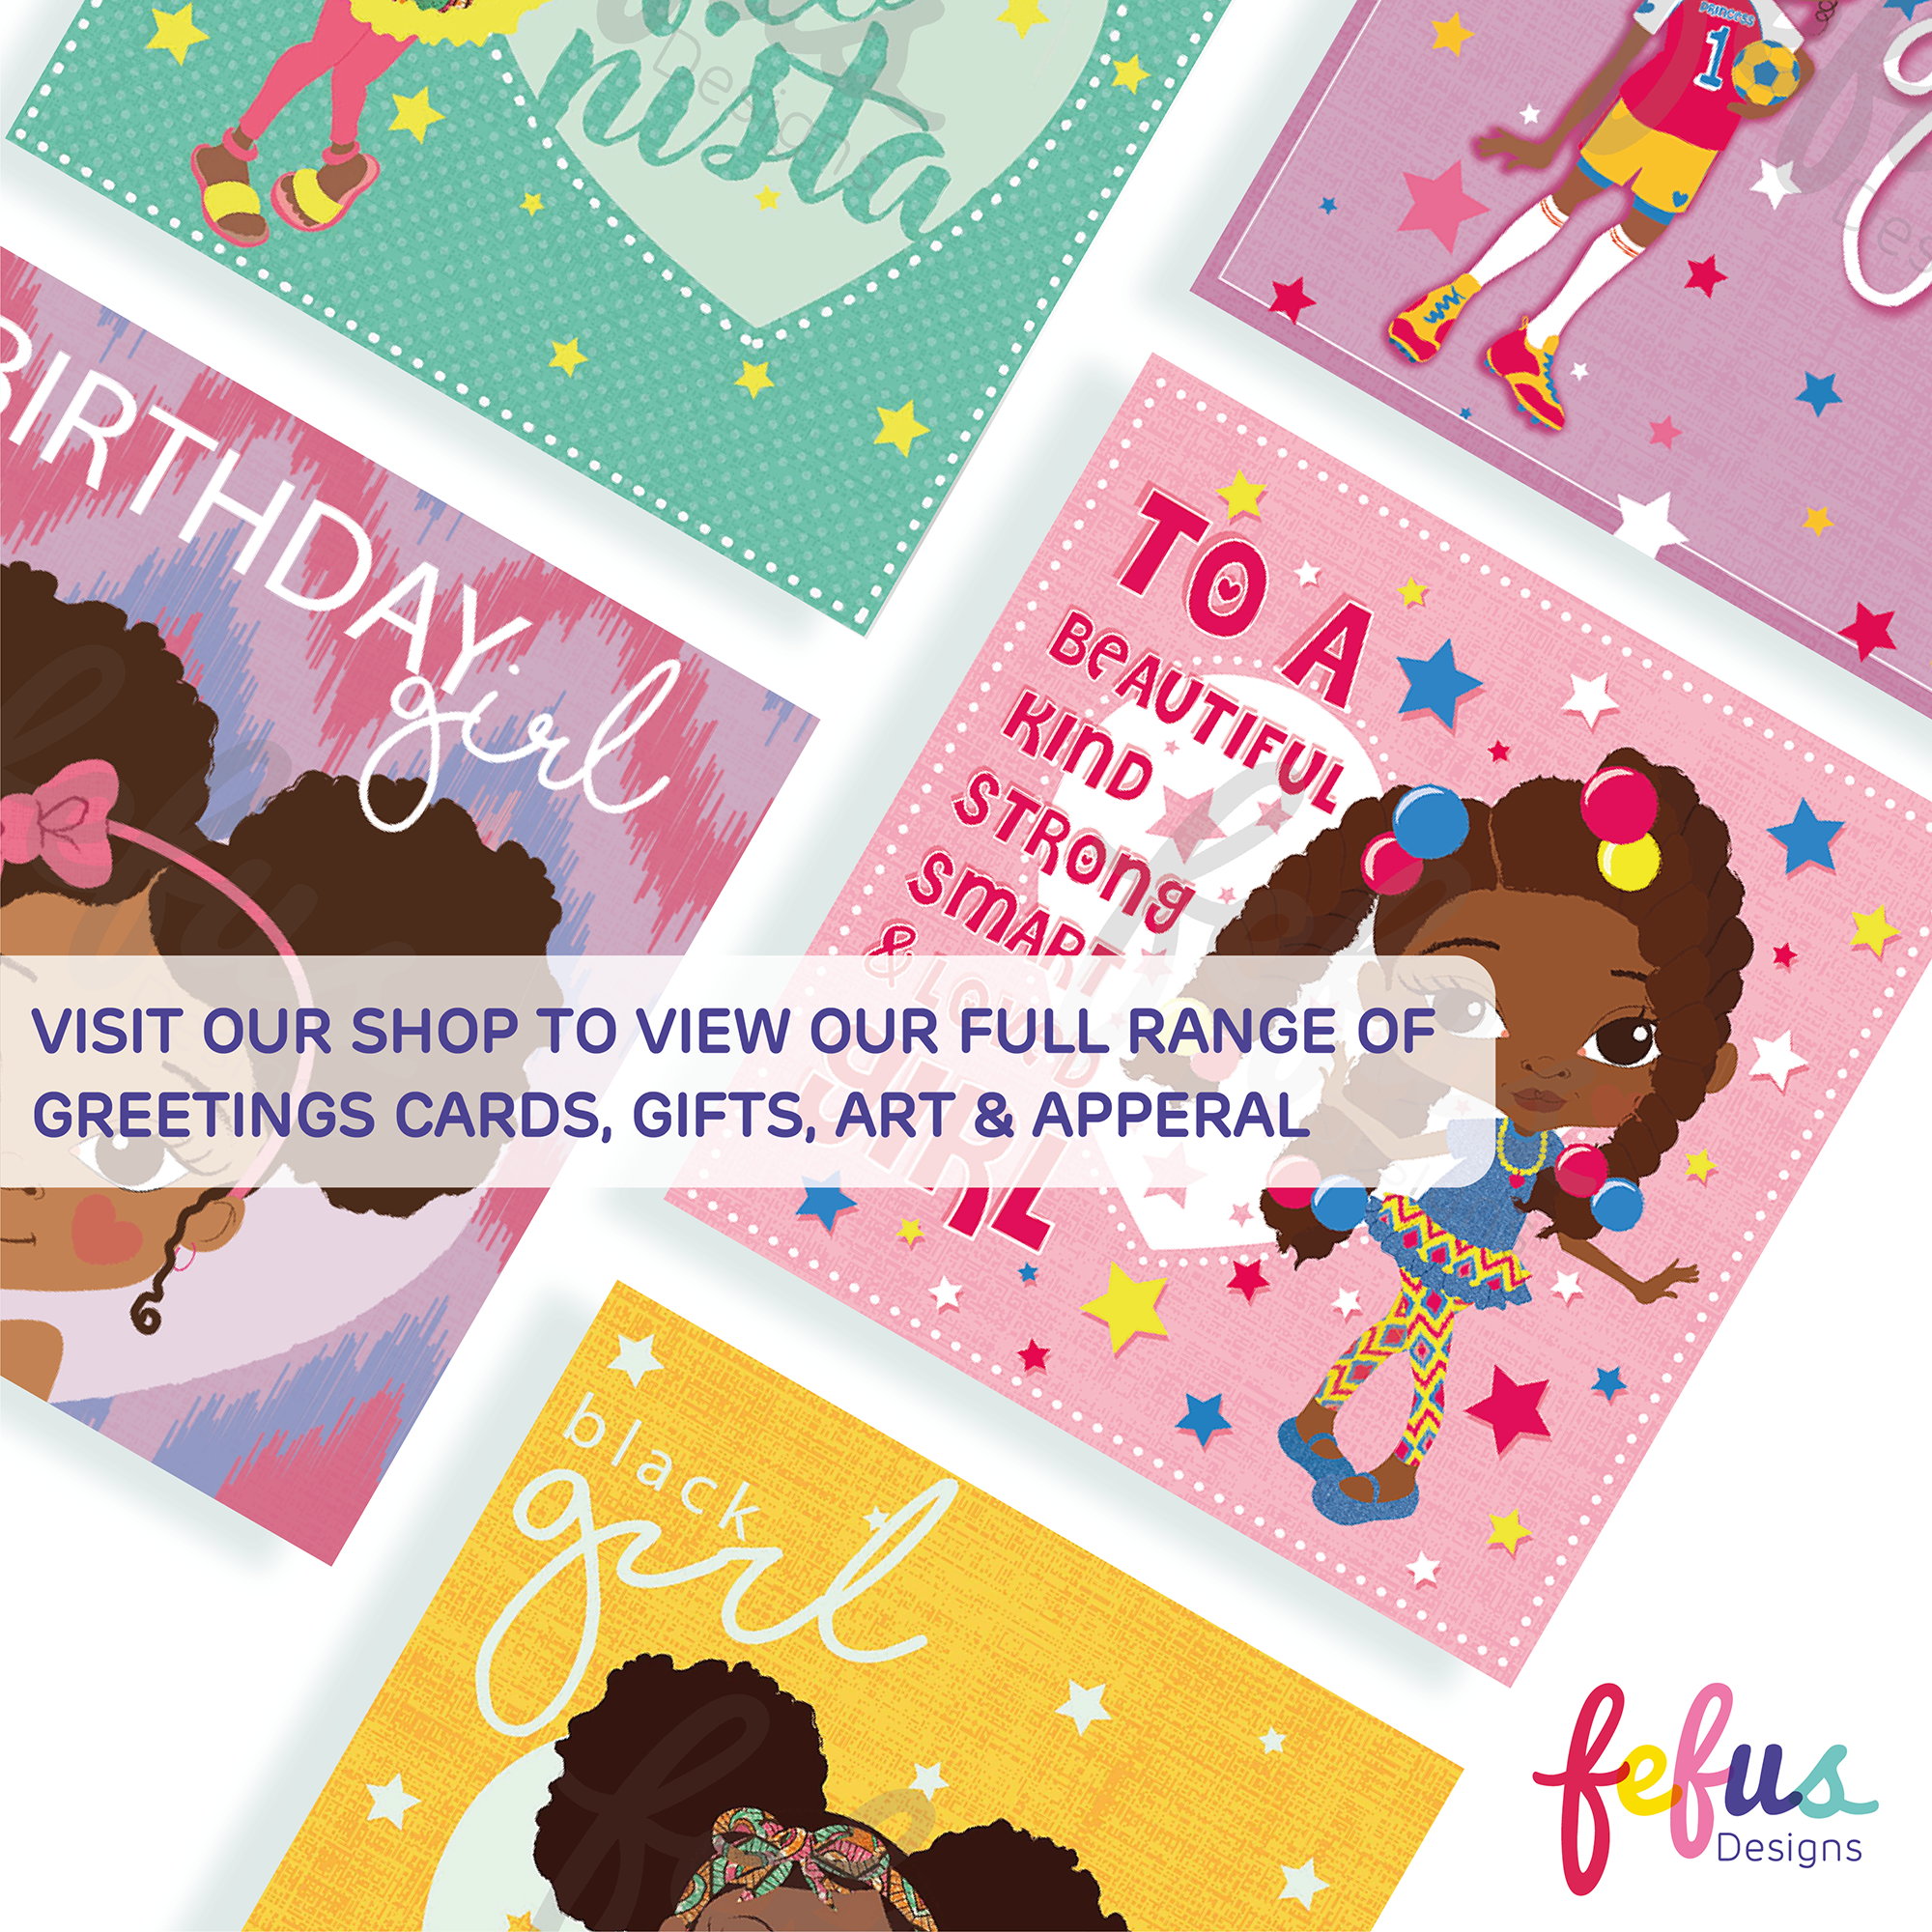 Yasmin - Afro Puffs - Mixed Race Girls Christmas Card | Fefus designs